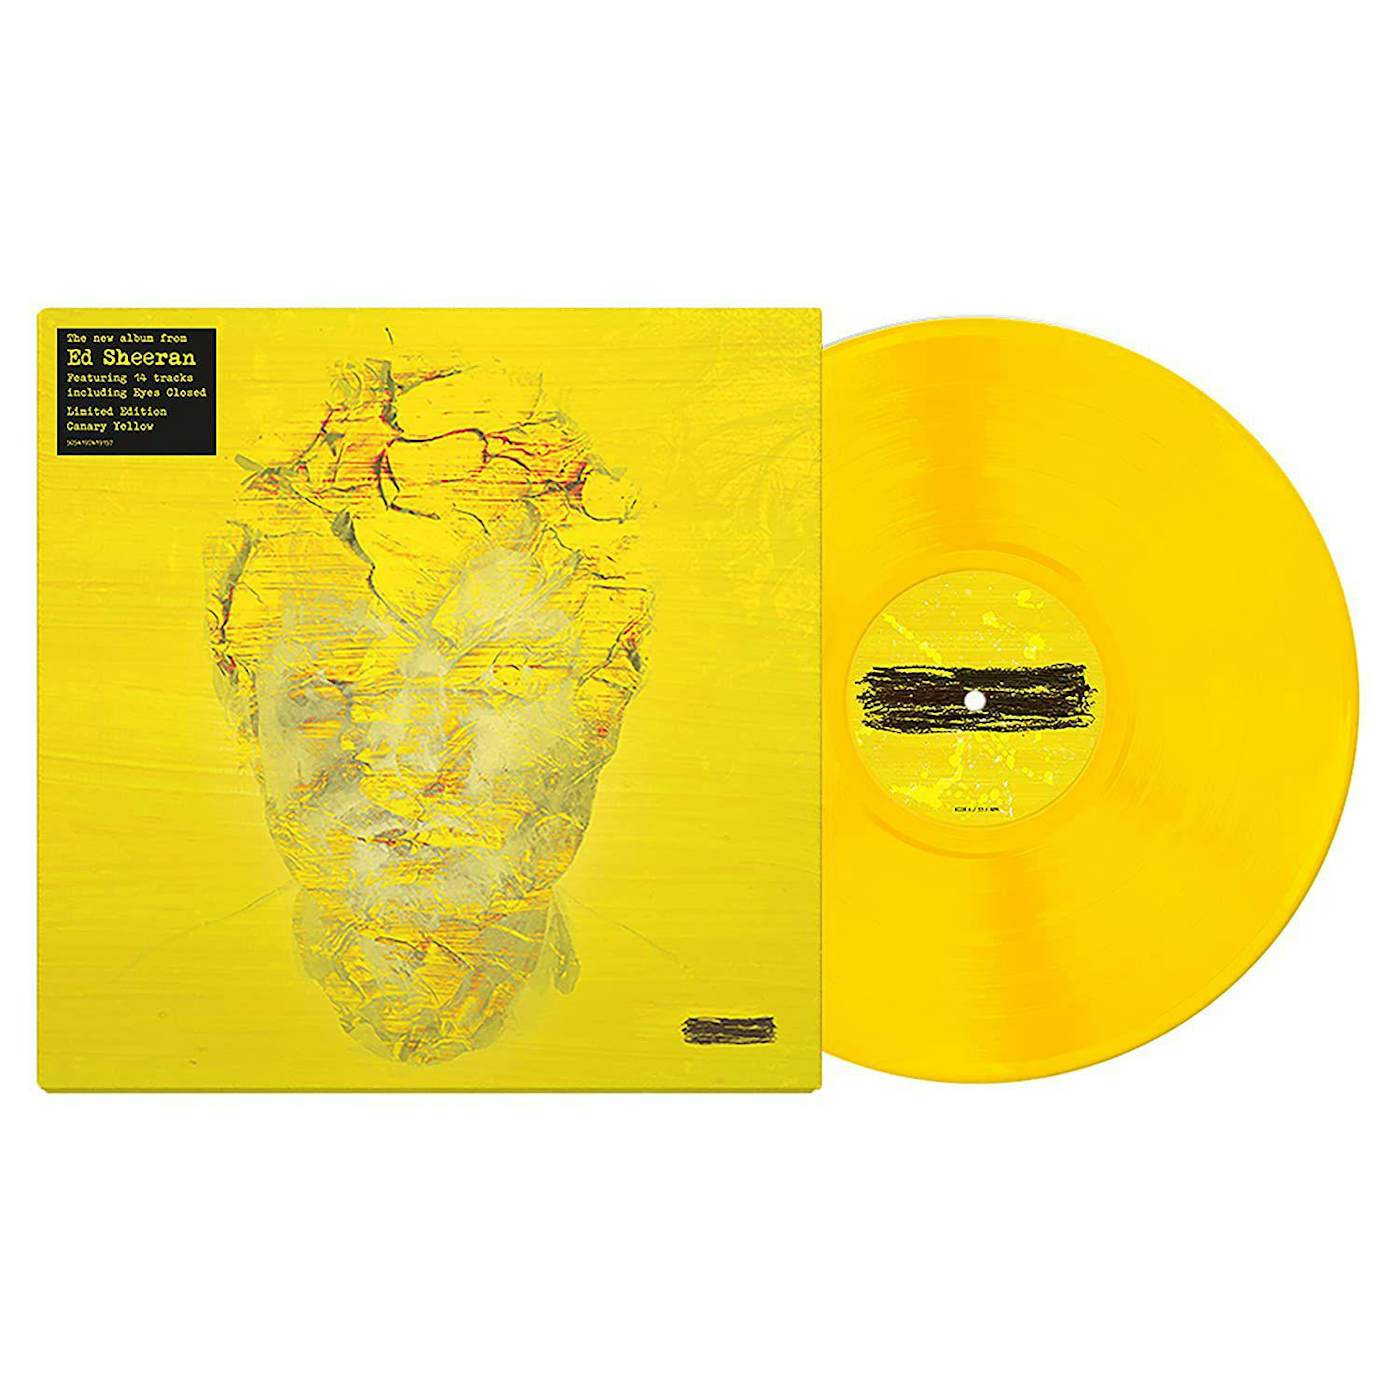 Ed Sheeran  - (Subtract) (Limited Edition/Yellow) Vinyl Record